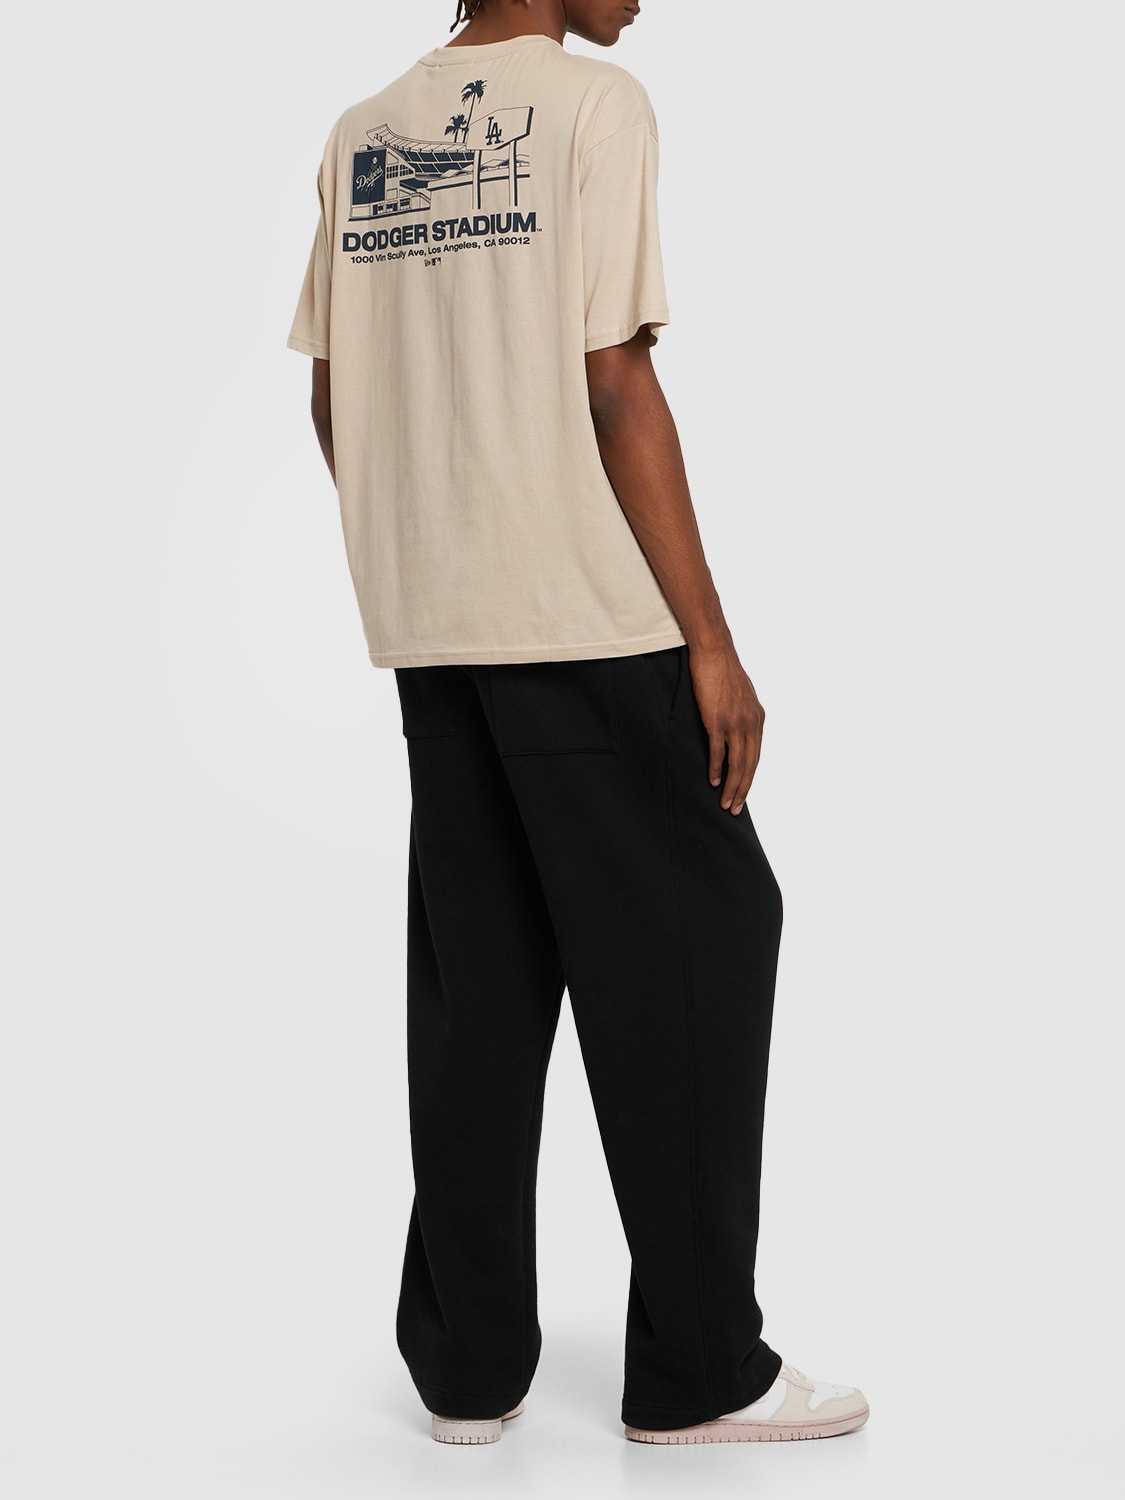 Dodger stadium printed cotton t-shirt - New Era - Men